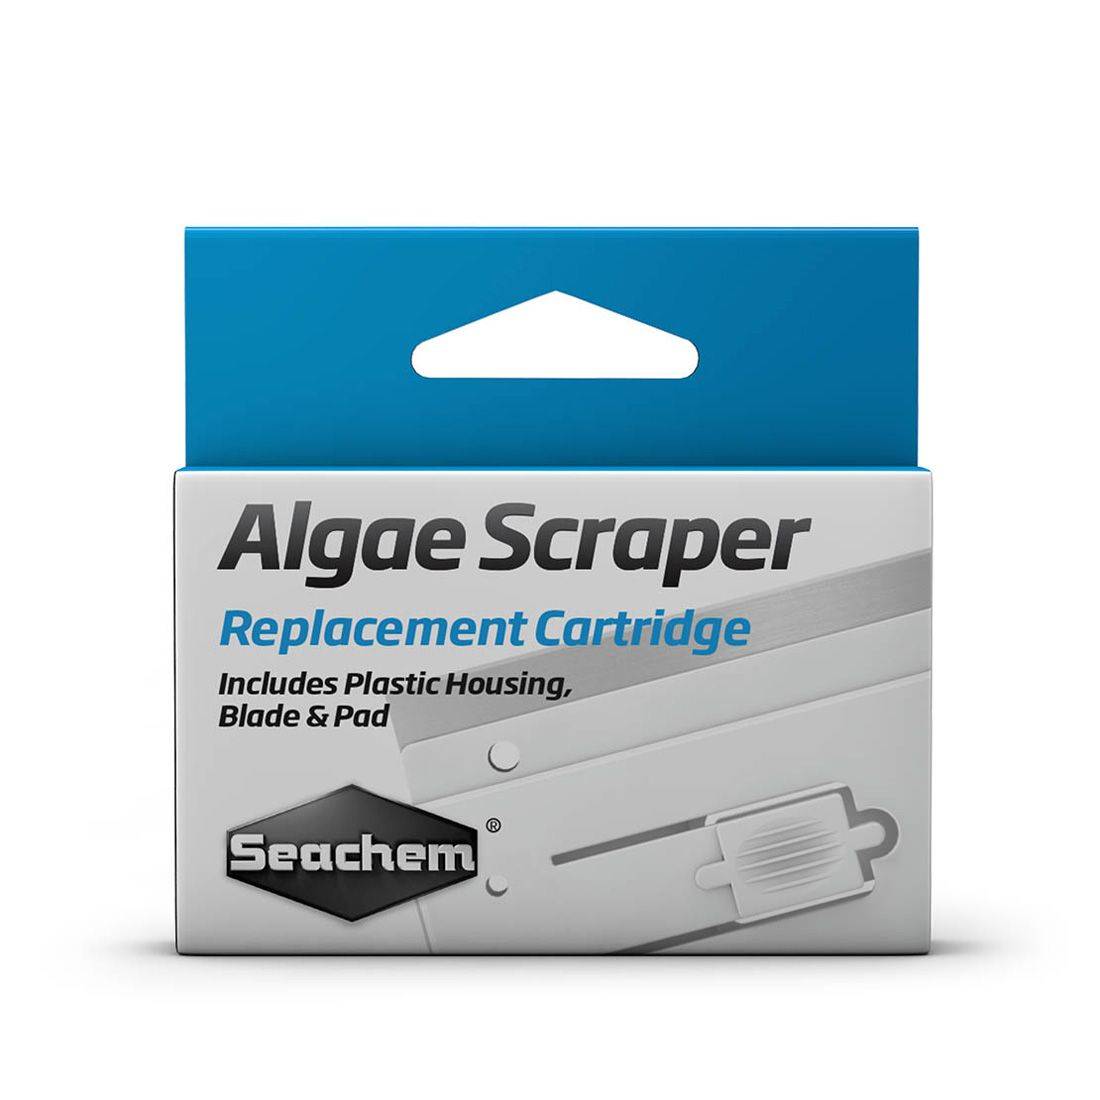 Replacement Cartridge Kit for Seachem Algae Scraper - Seachem - Seachem